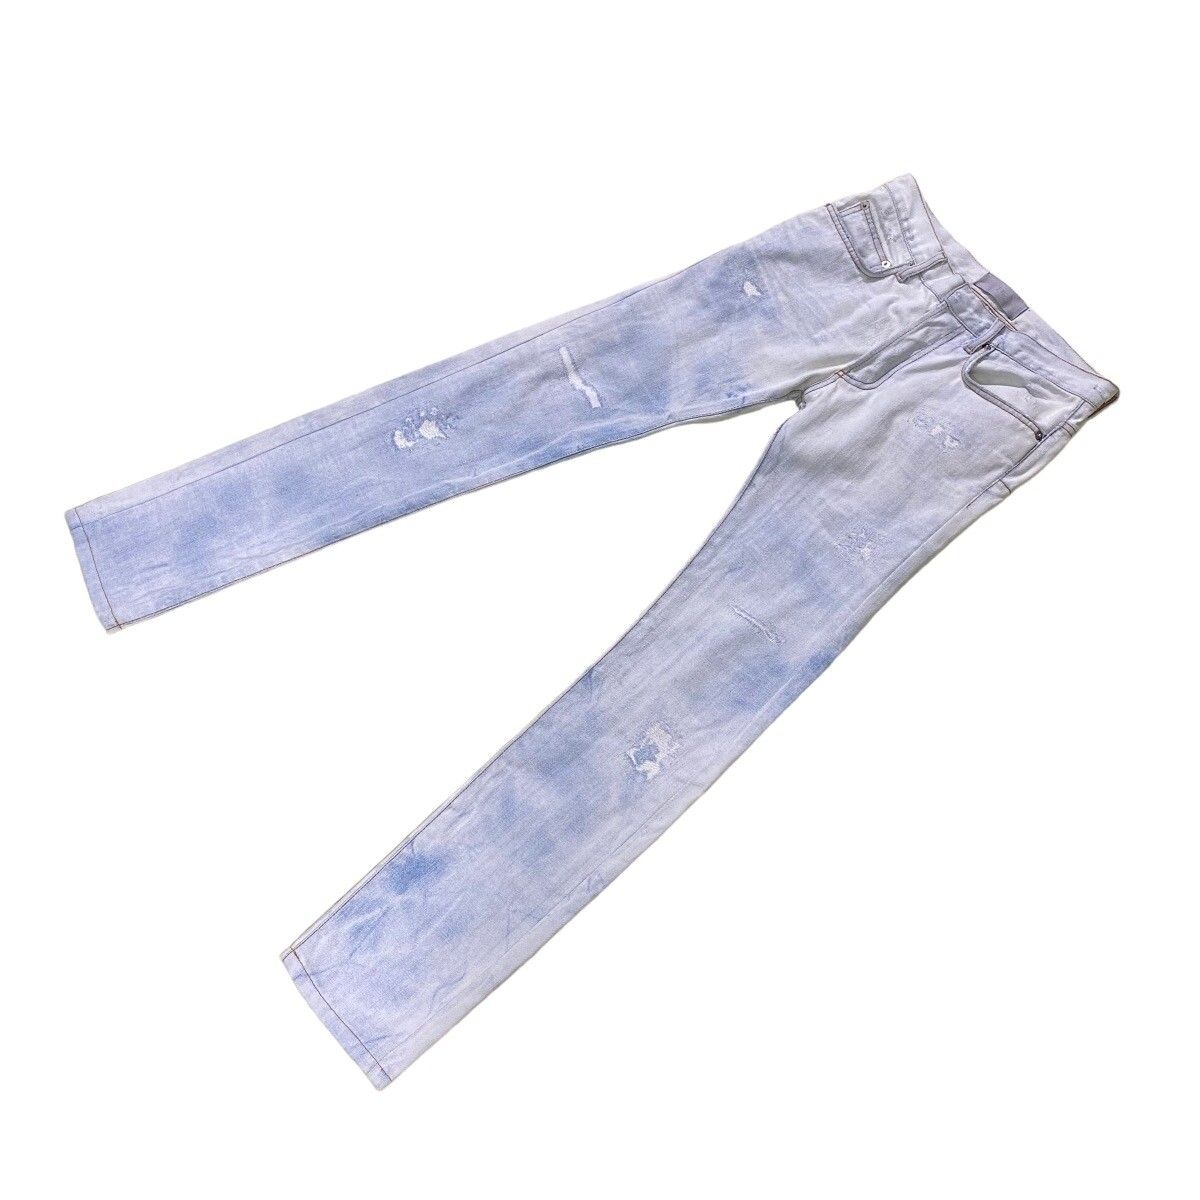 Dior Homme SS06 Dirty Snow Denim Jeans - 3